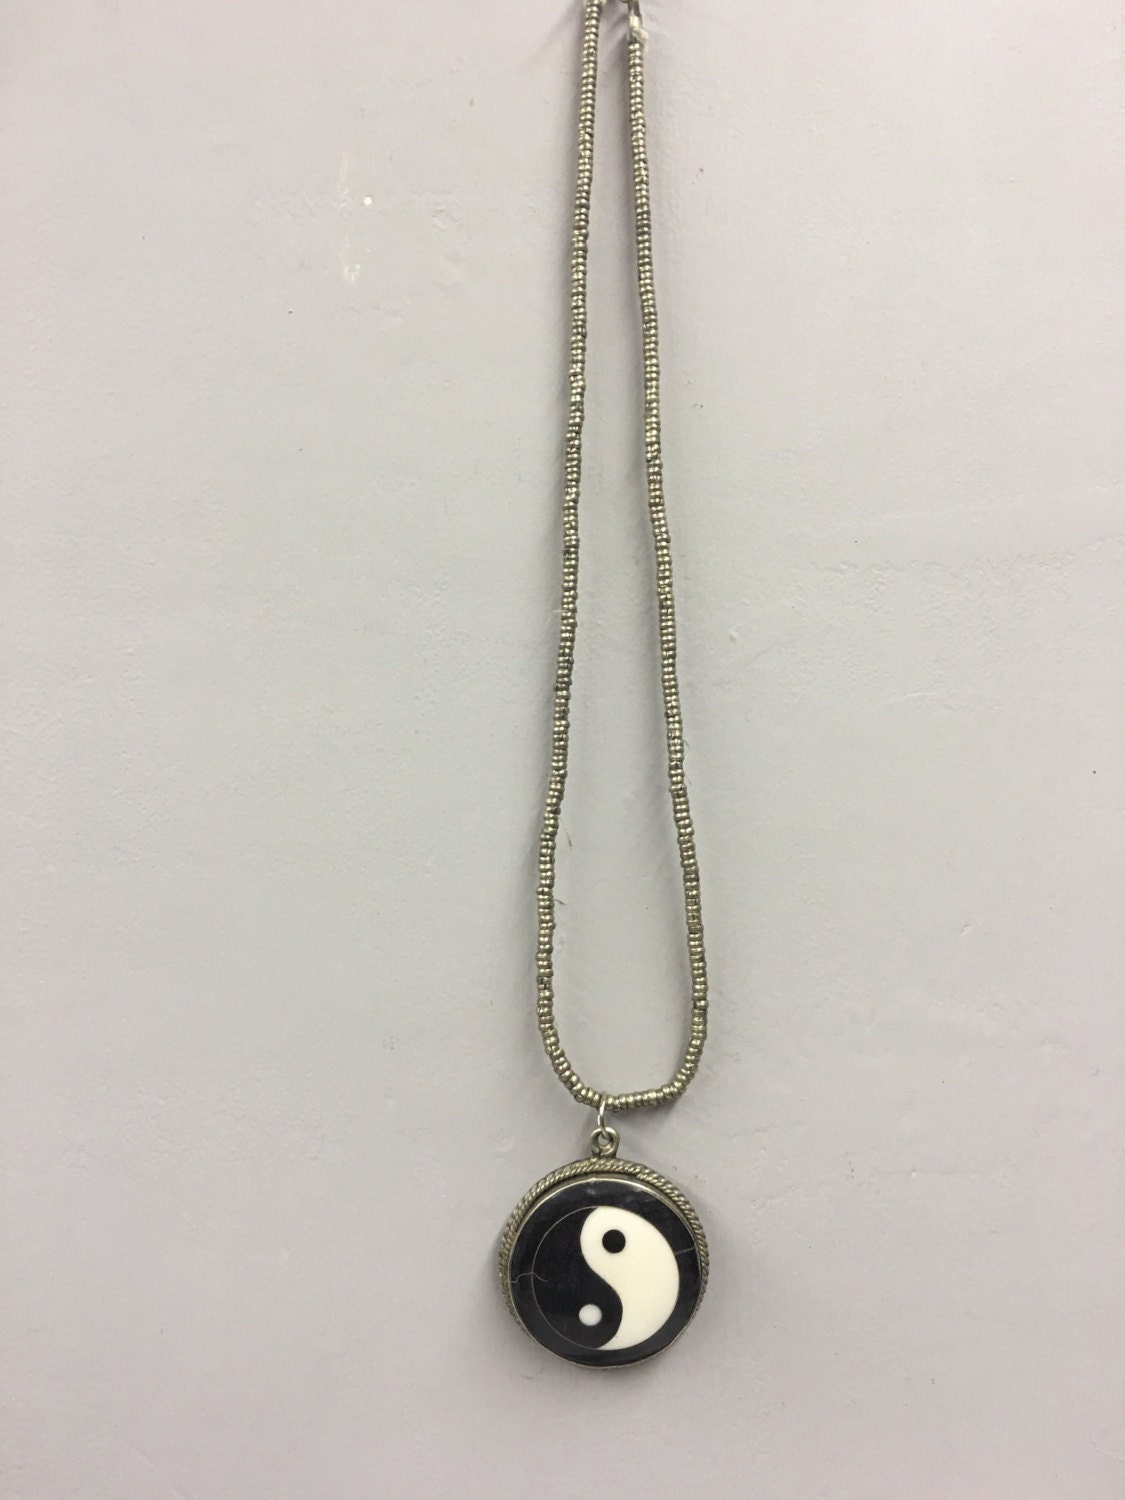 Pendant Yin and Yang Chinese Necklace Handmade Black Horn Dark White ...